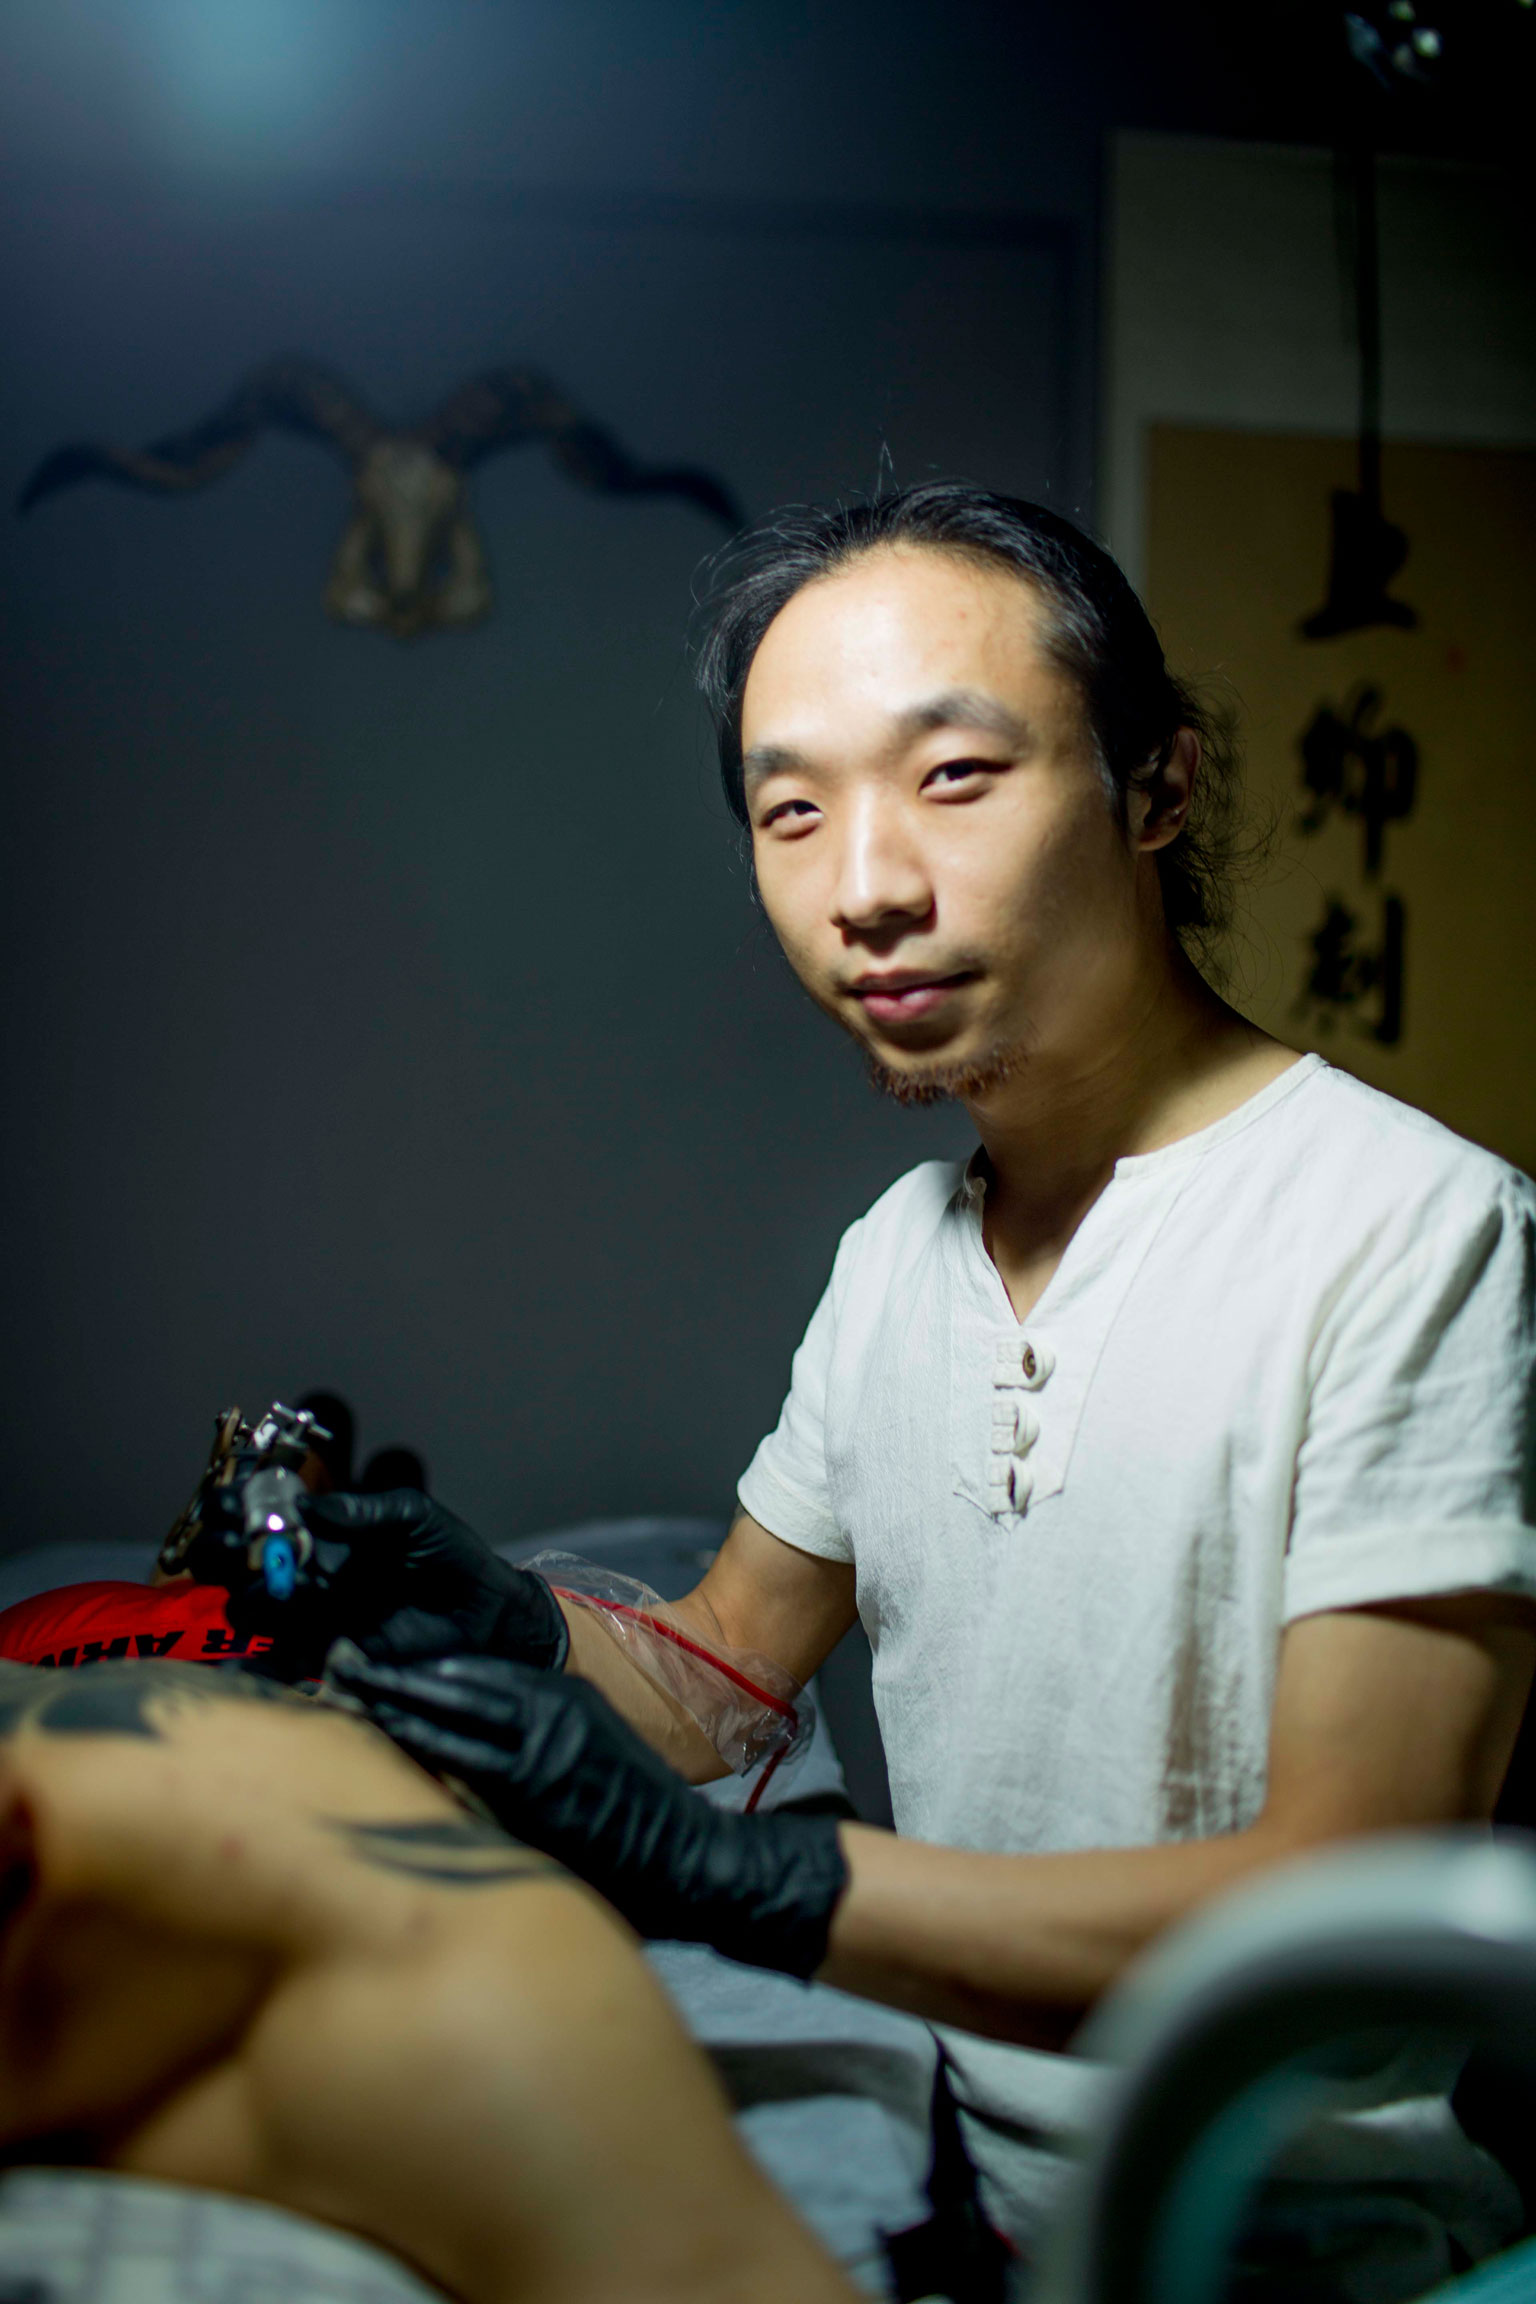 Shanghai tattoo artist Shang Qing